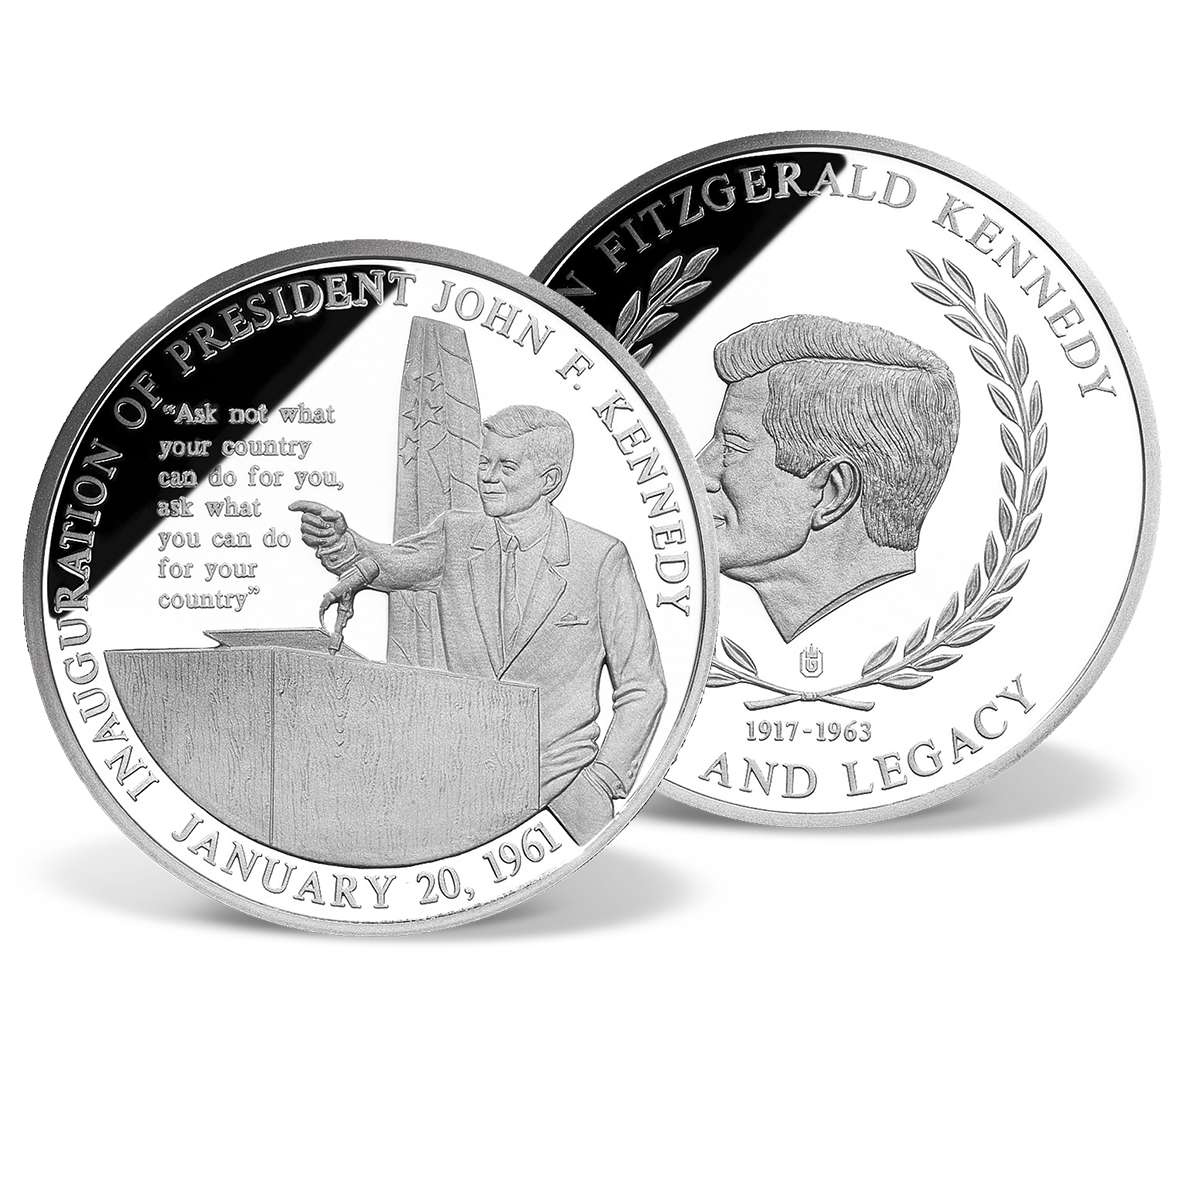 John F. Kennedy Inaugural Speech Commemorative Coin